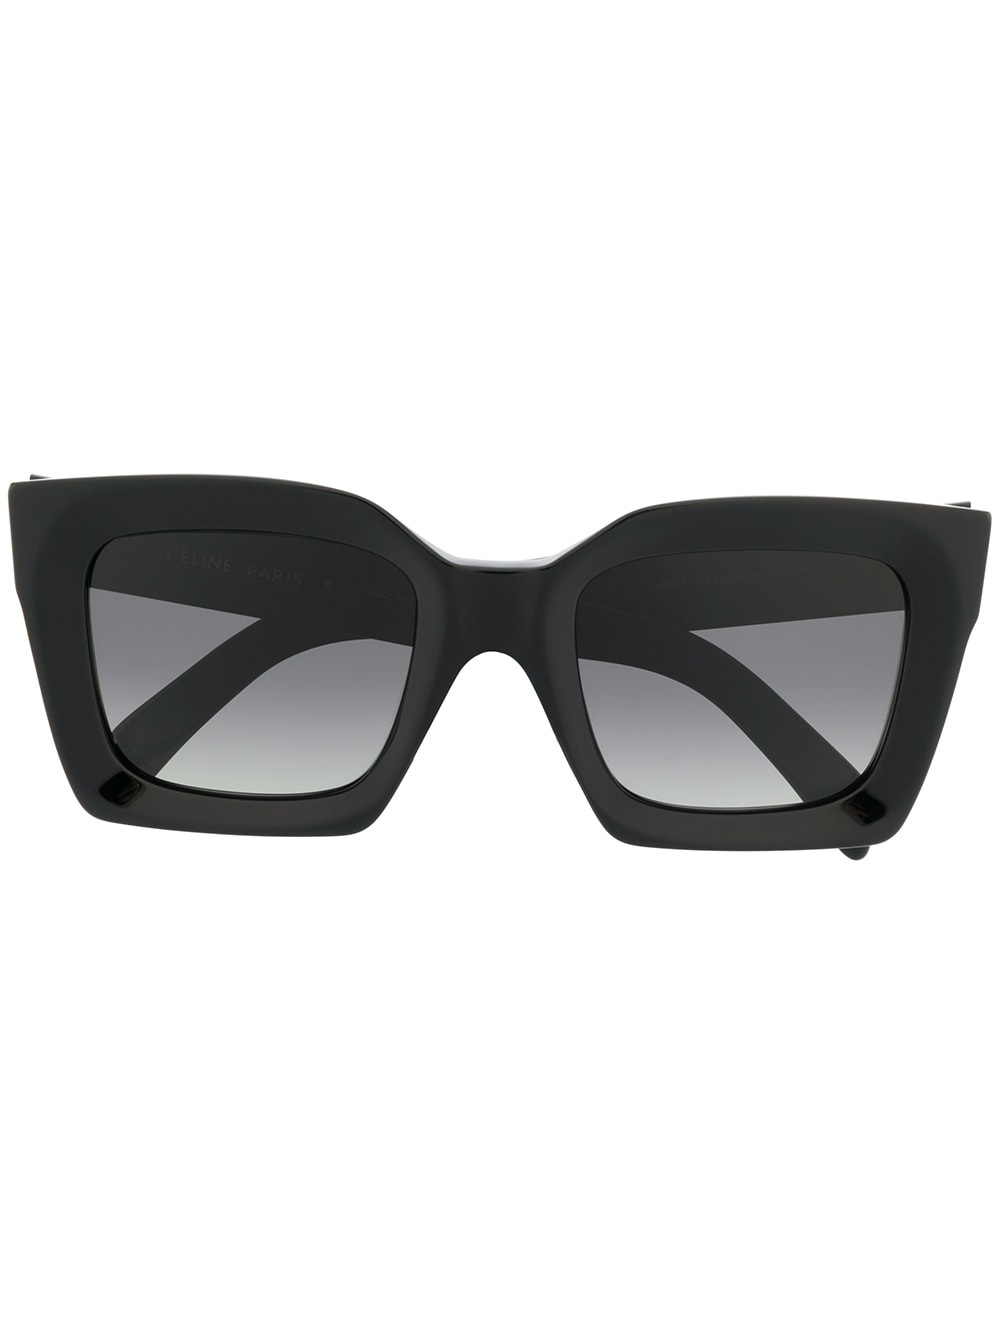 Celine Eyewear - square-frame sunglasses - women - Acetate - 51 - Black